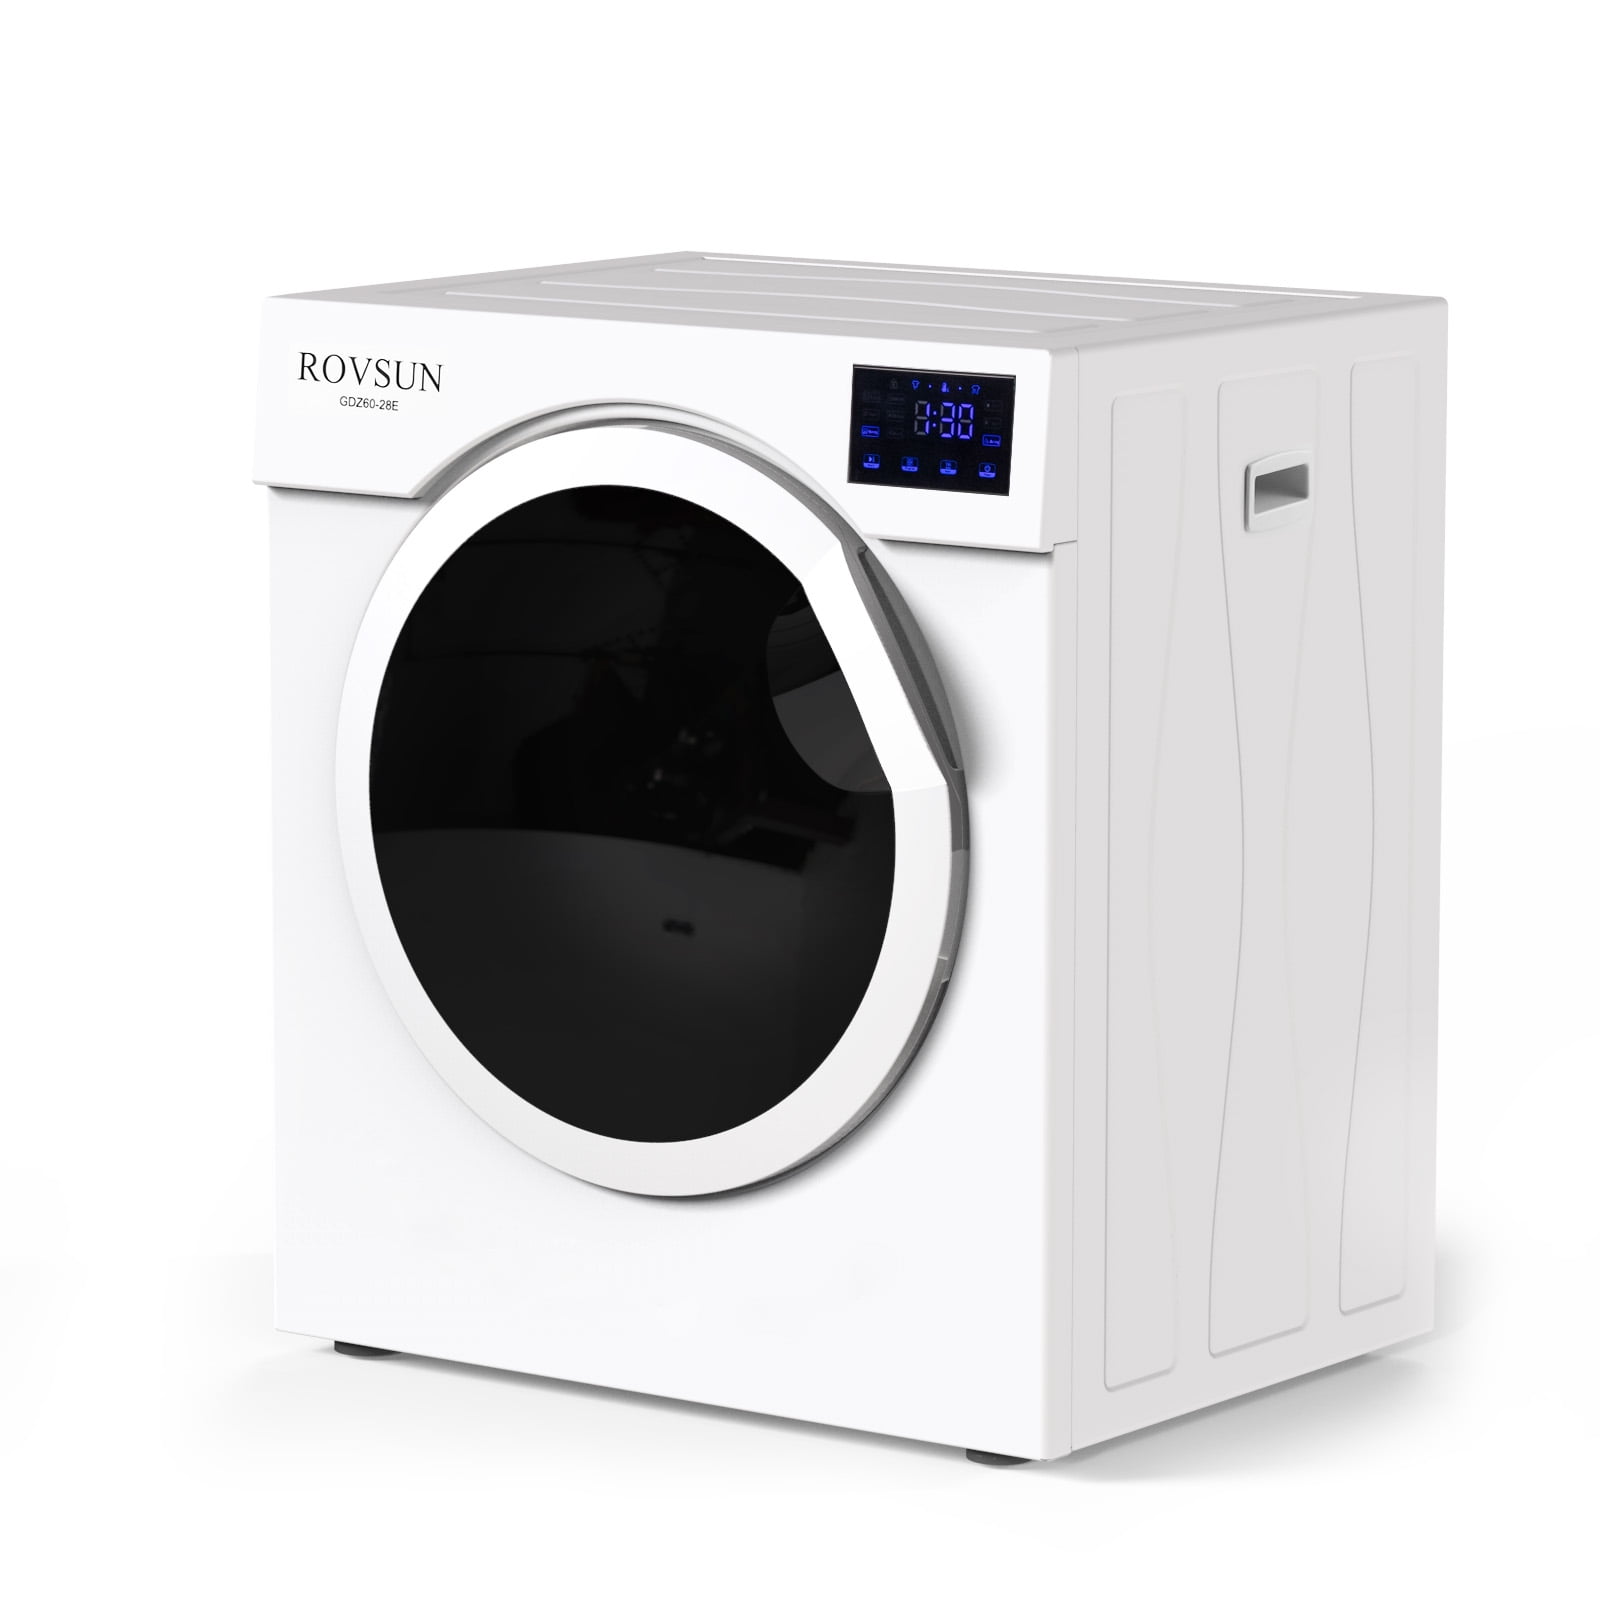 FEMUN,Clothes Dryer Machine,Portable Clothes Dryer,Portable Dryer